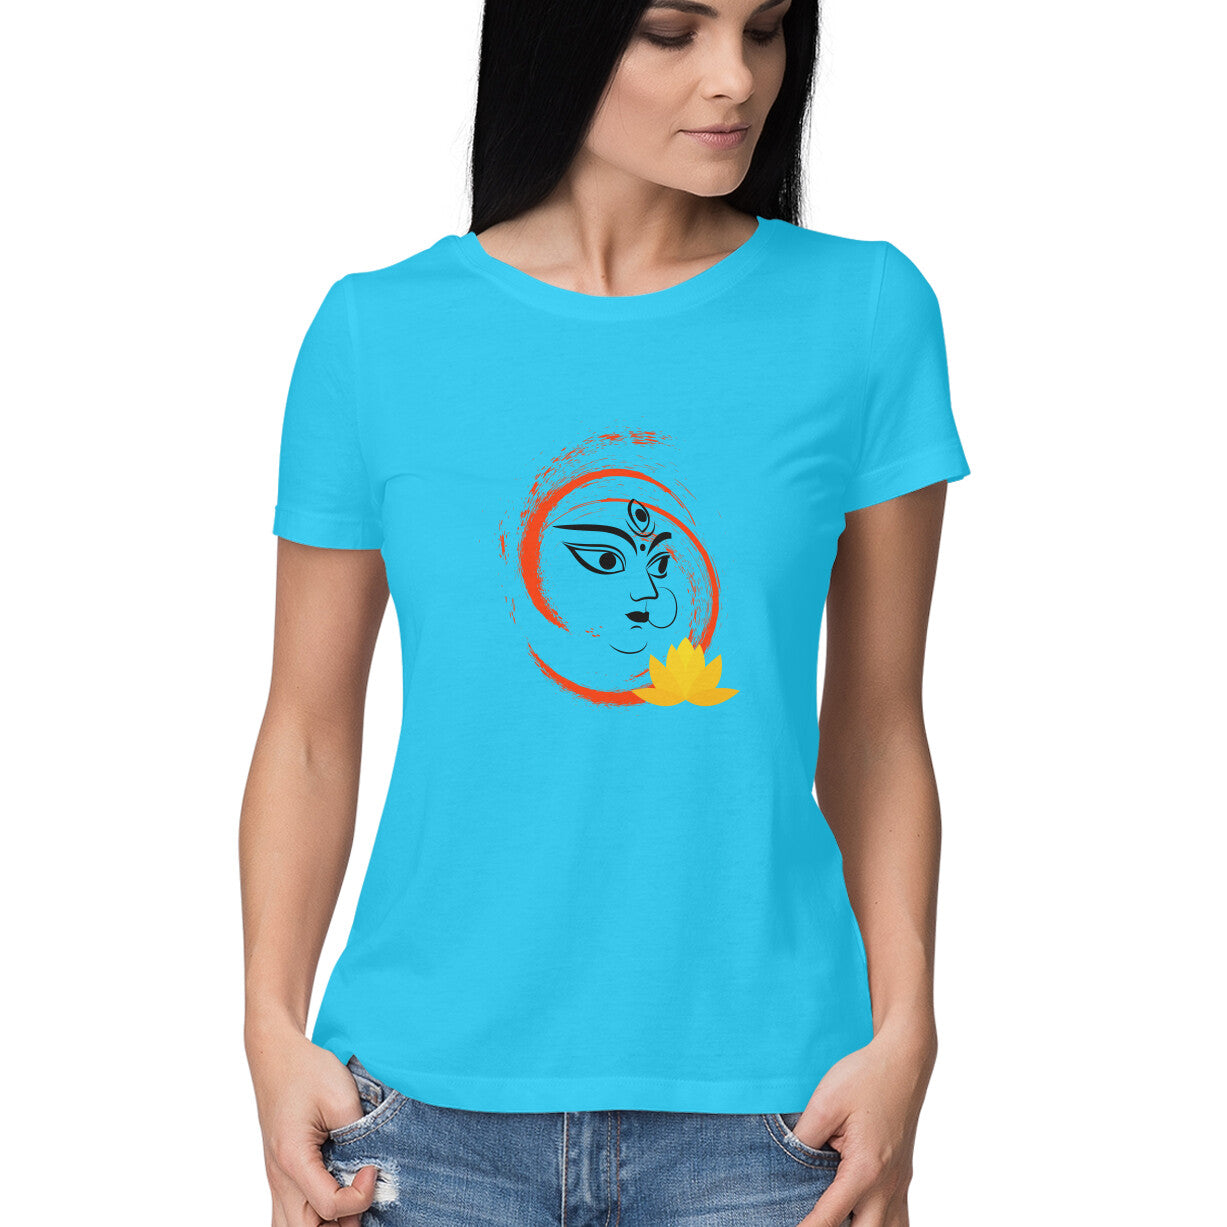 Powerful Mother Goddess Women's T-Shirt - Circle of Life Design